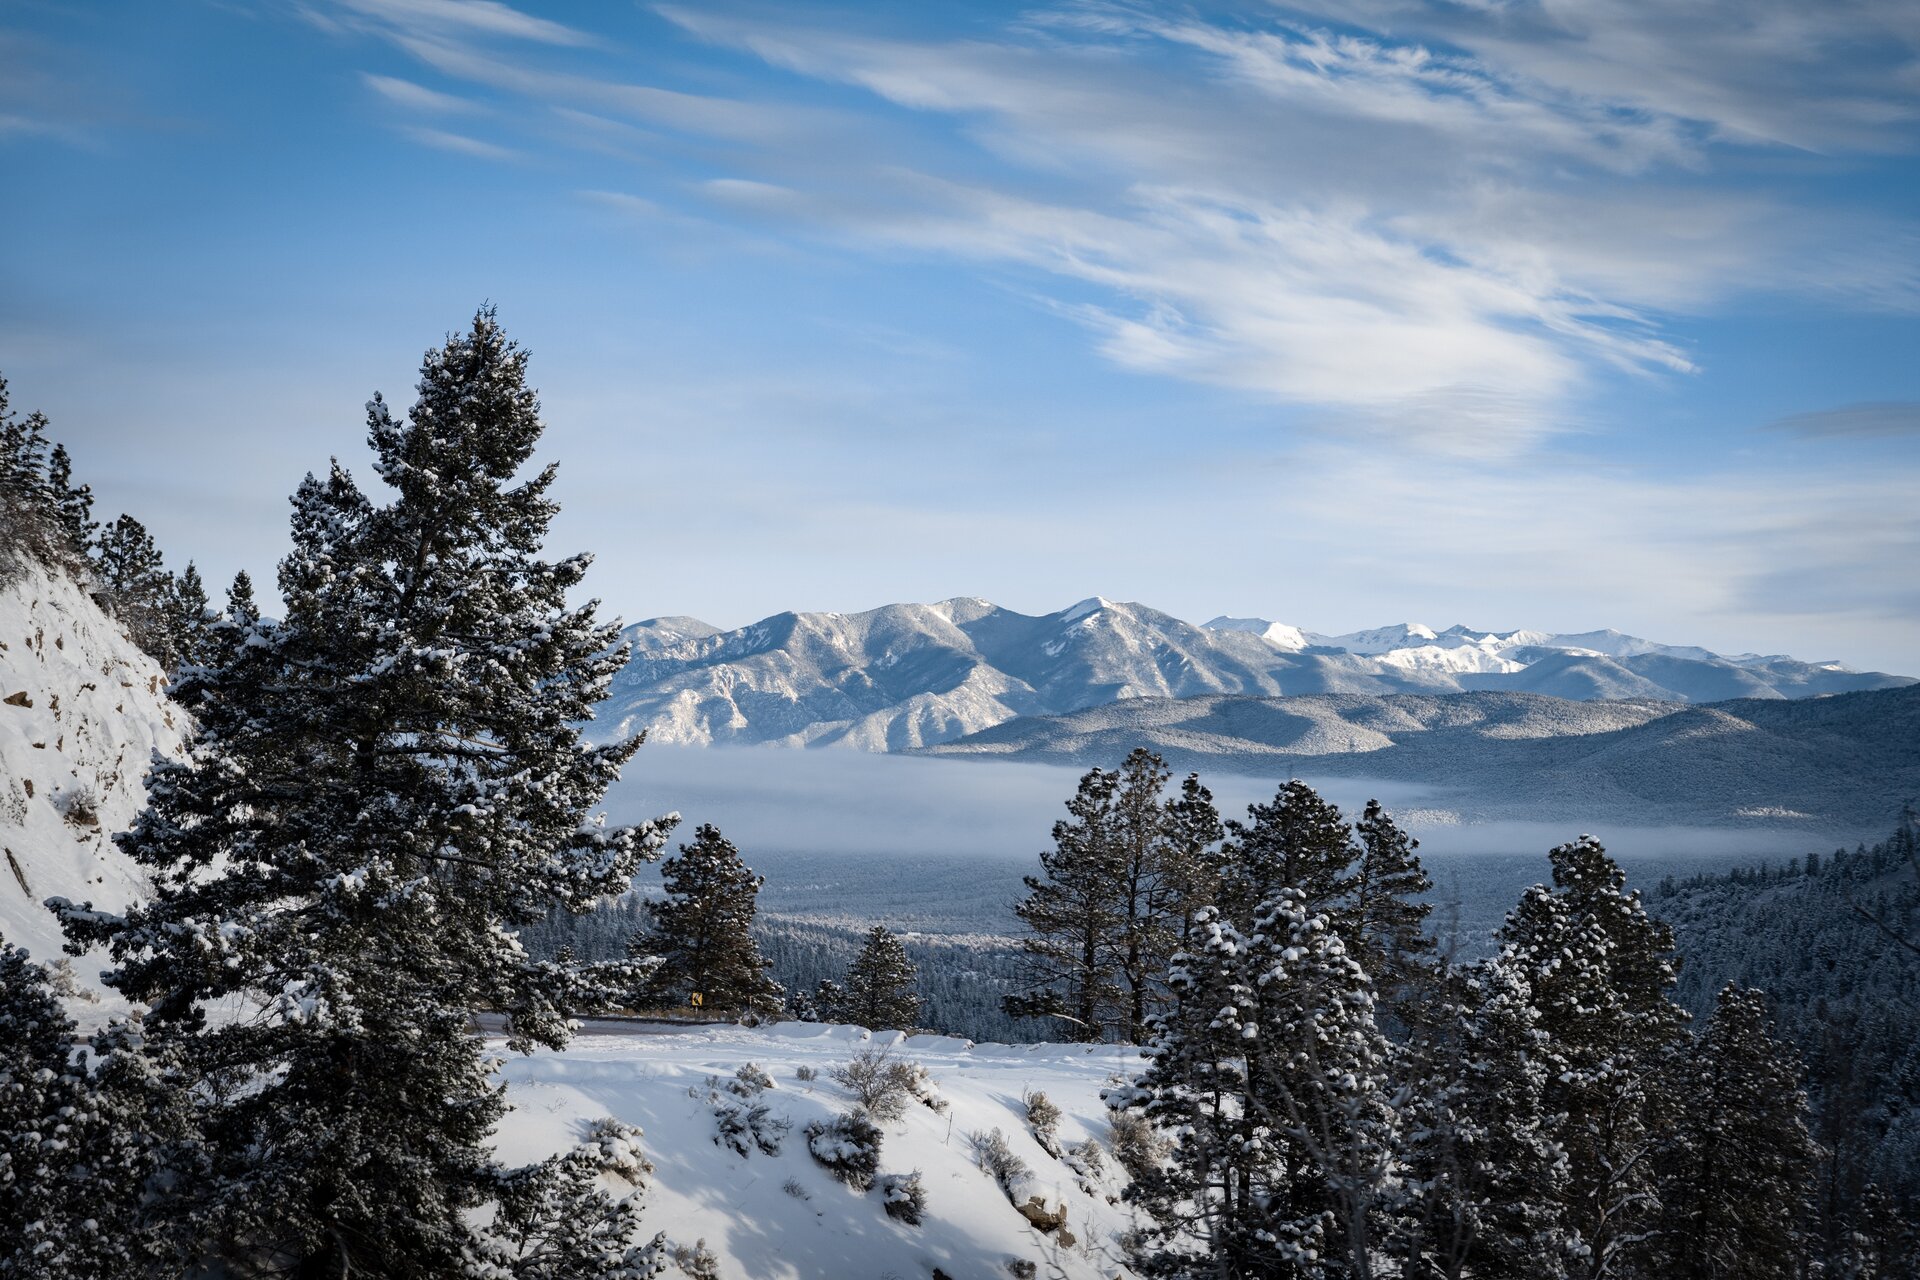 Taos Mountain in the winter